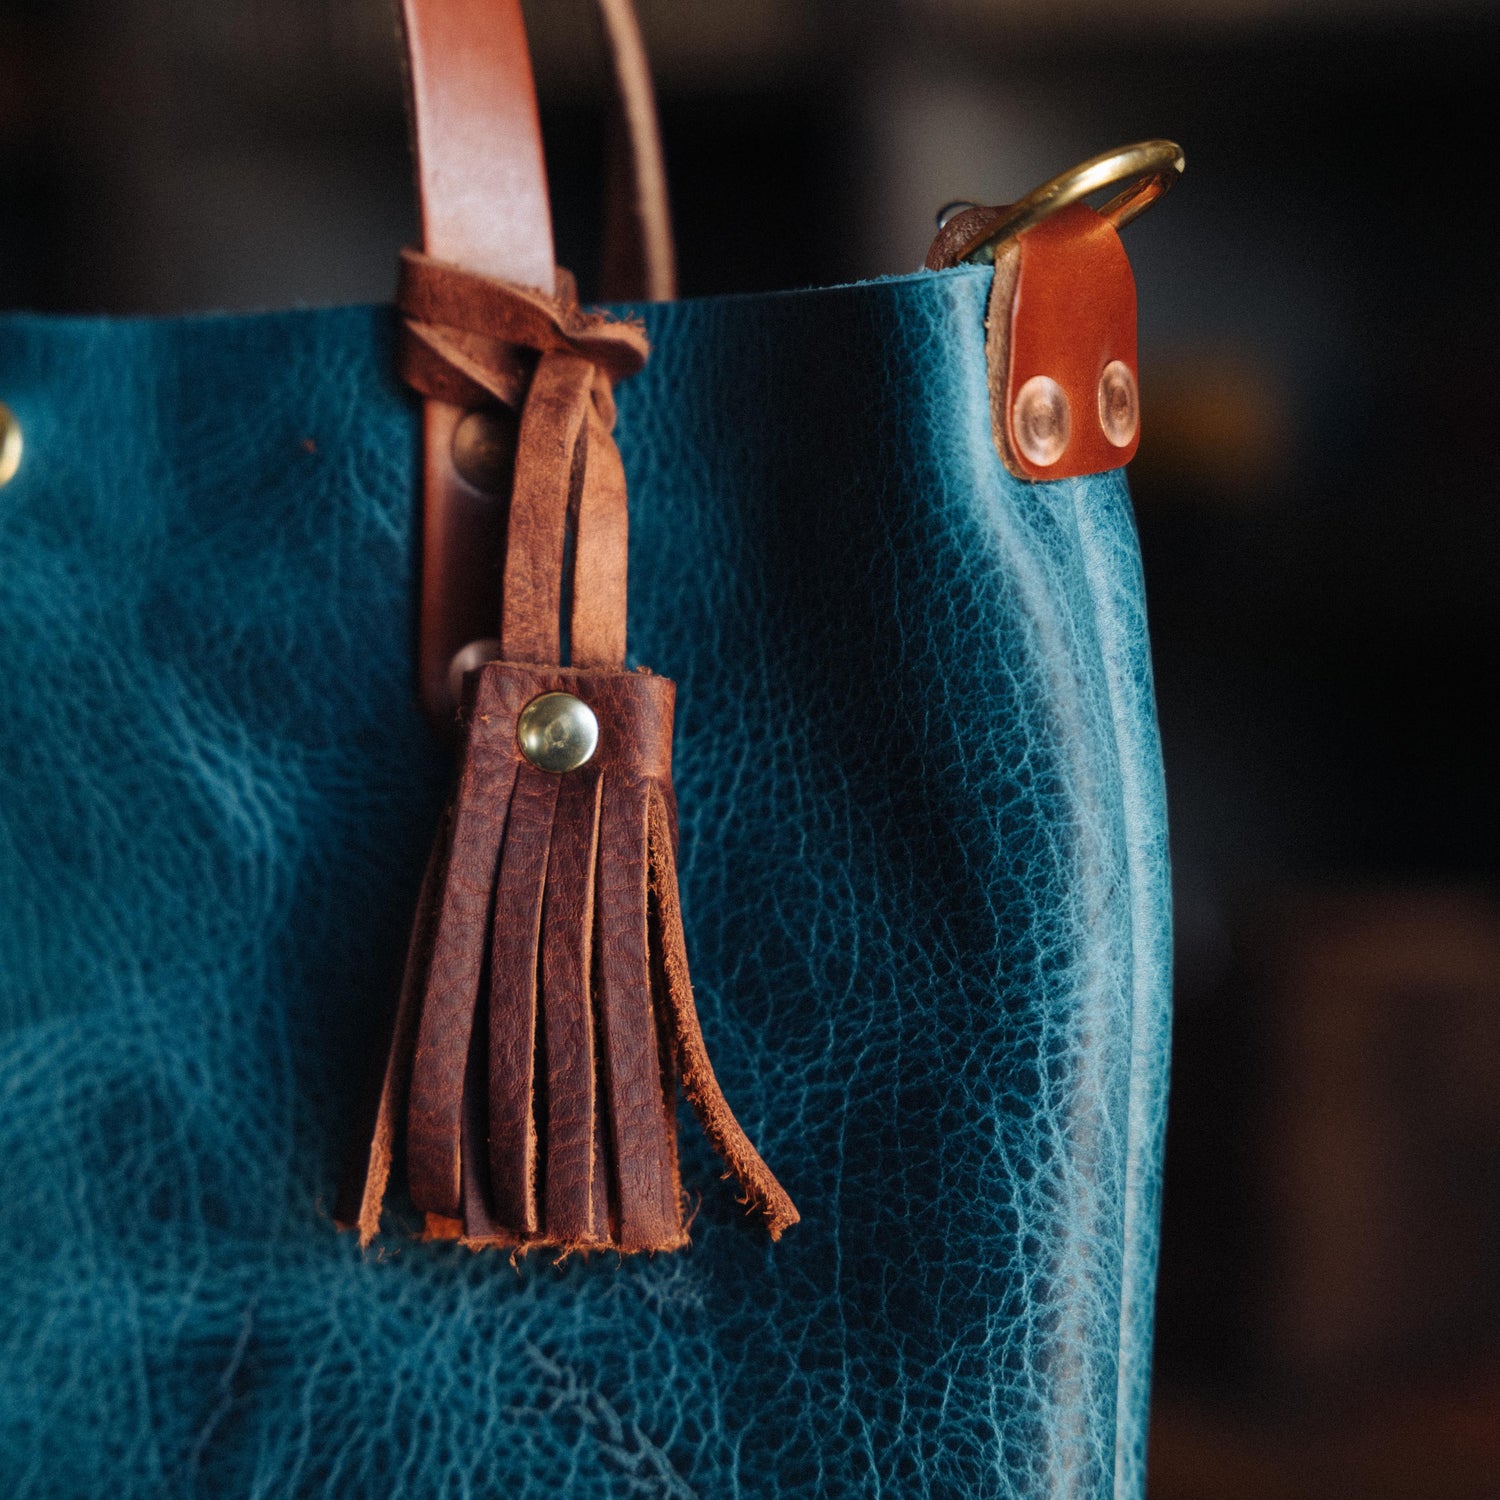 Vachetta Leather Long Tassel Bag Charm- Natural Vachetta or